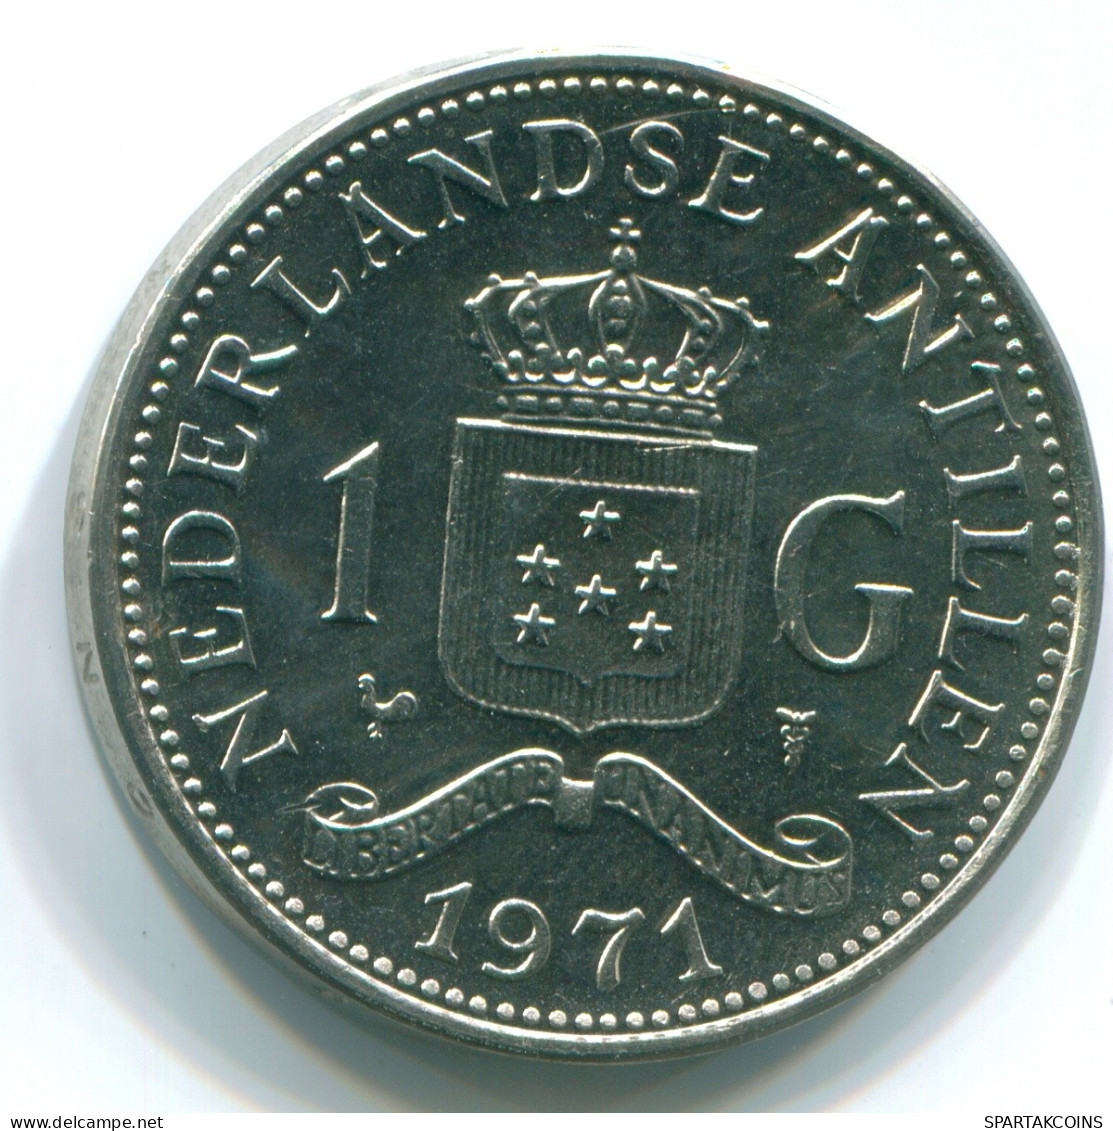 1 GULDEN 1971 NETHERLANDS ANTILLES Nickel Colonial Coin #S11914.U.A - Nederlandse Antillen